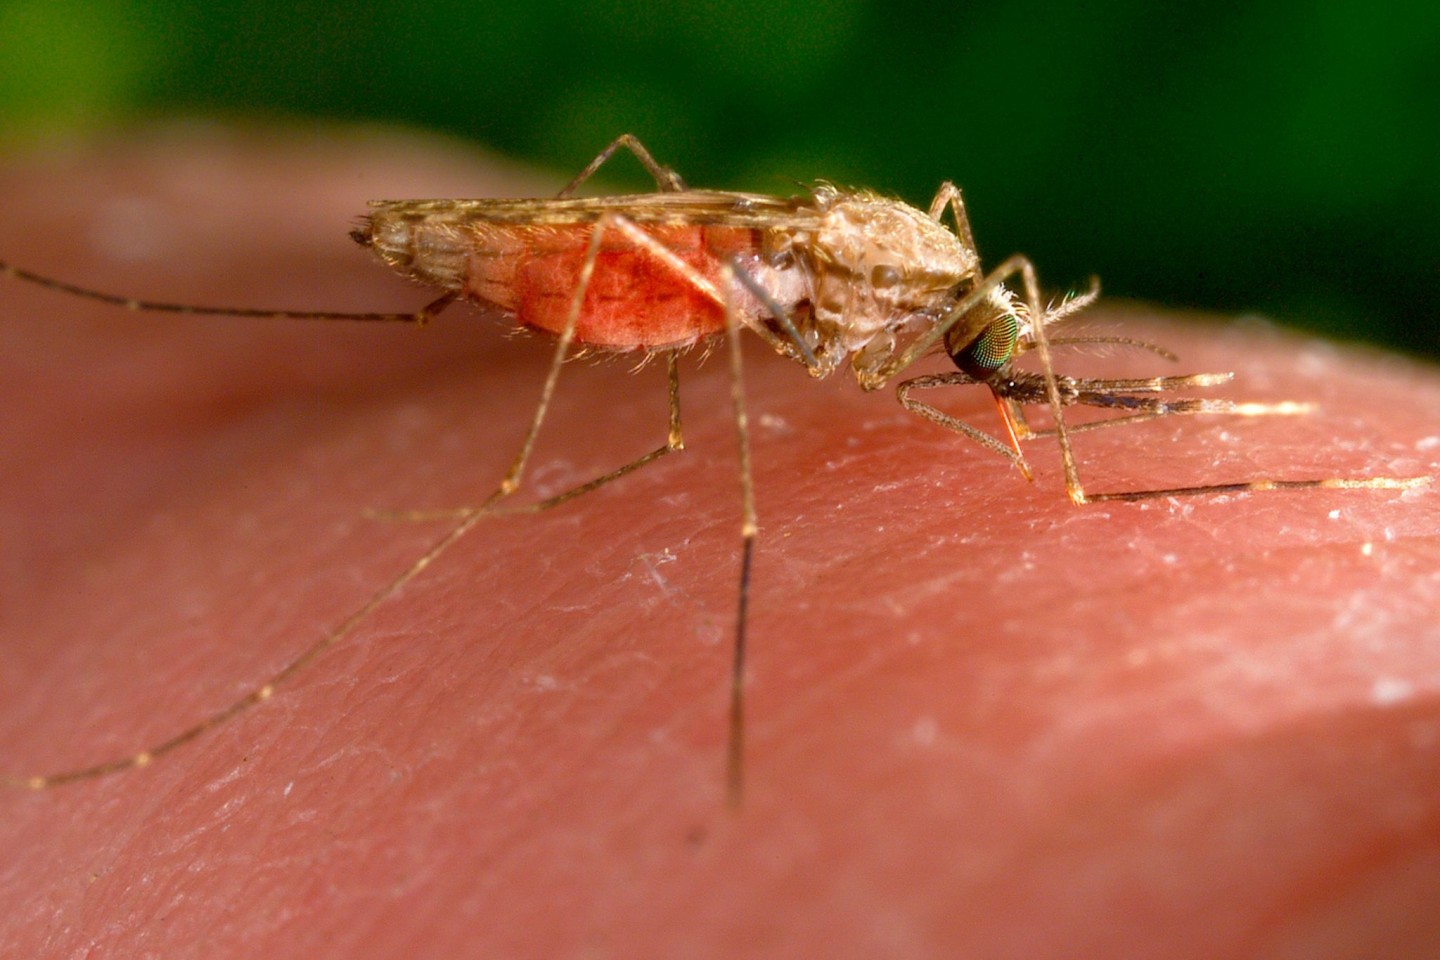 Anopheles-Mücken übertragen Malaria-Erreger.